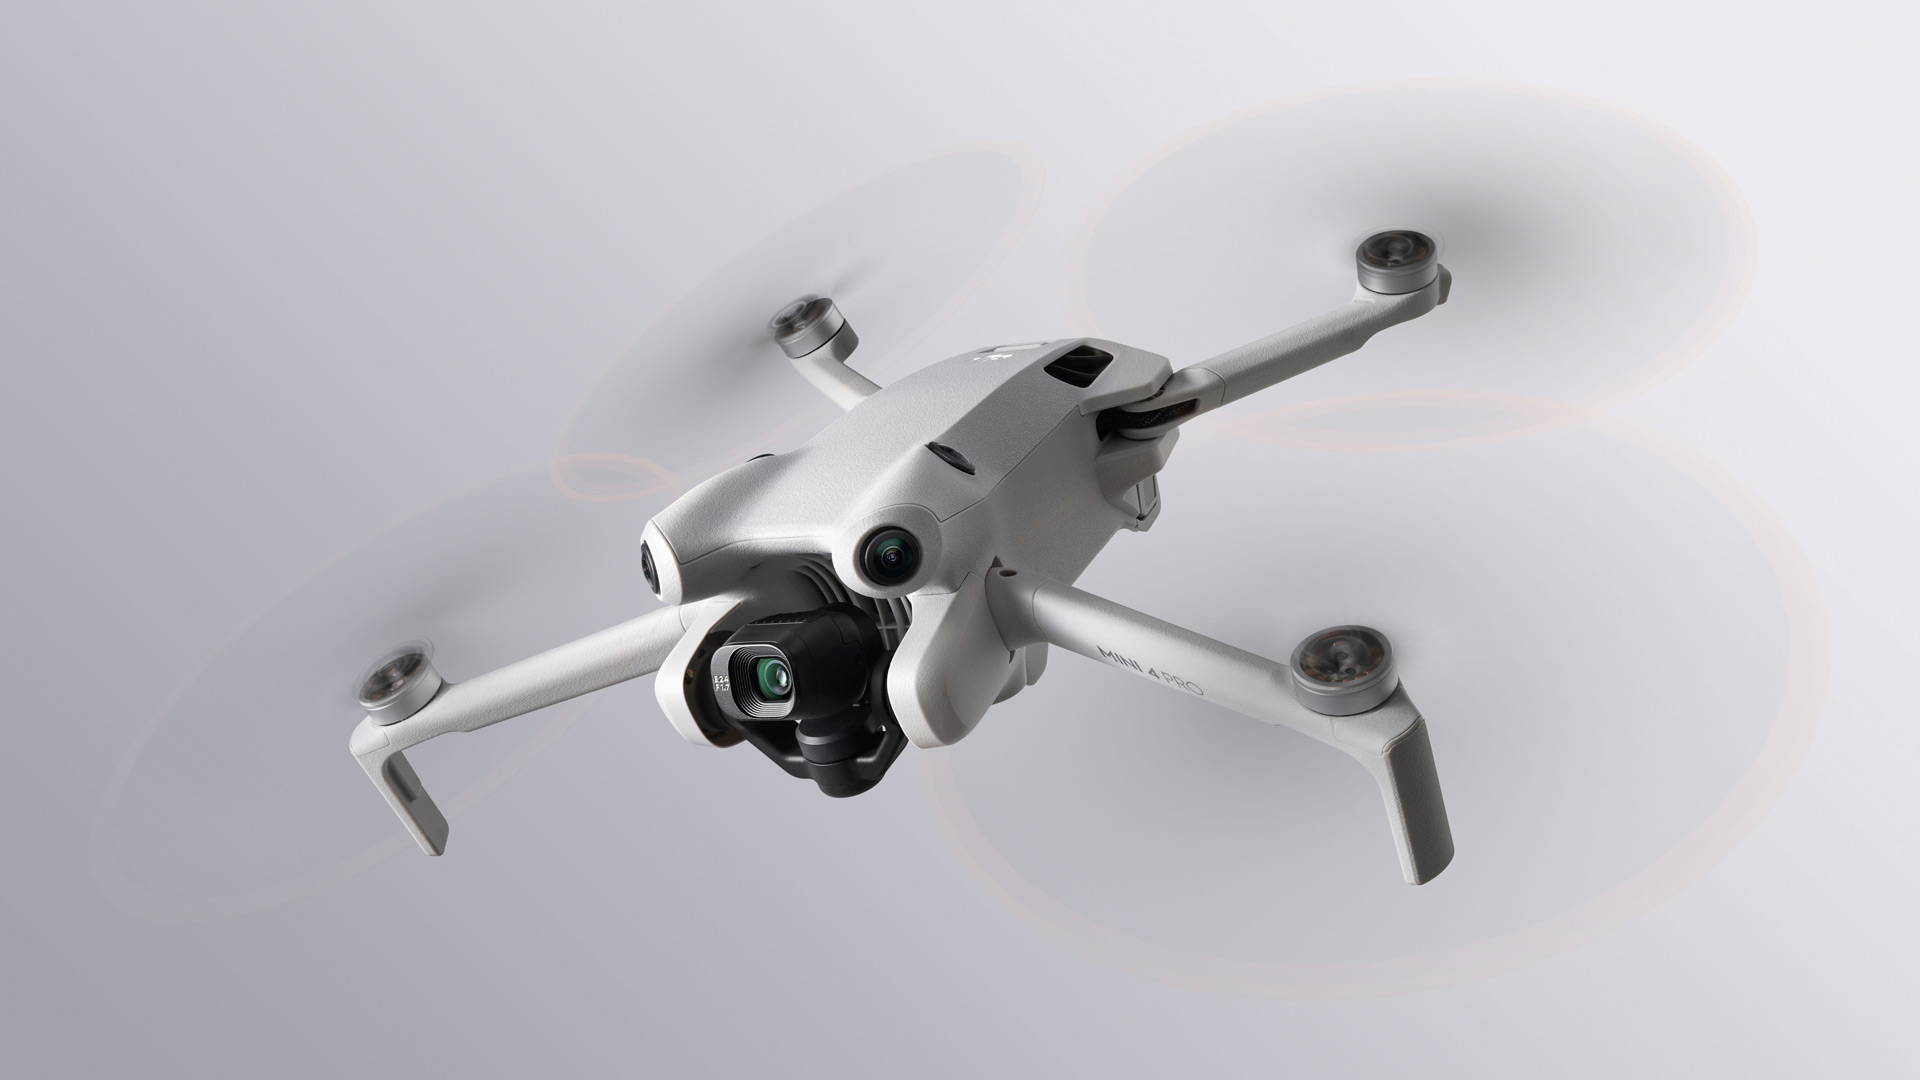 DJI Mini 4 Pro Drone: Ultra-Compact 4K/60fps HDR Imaging